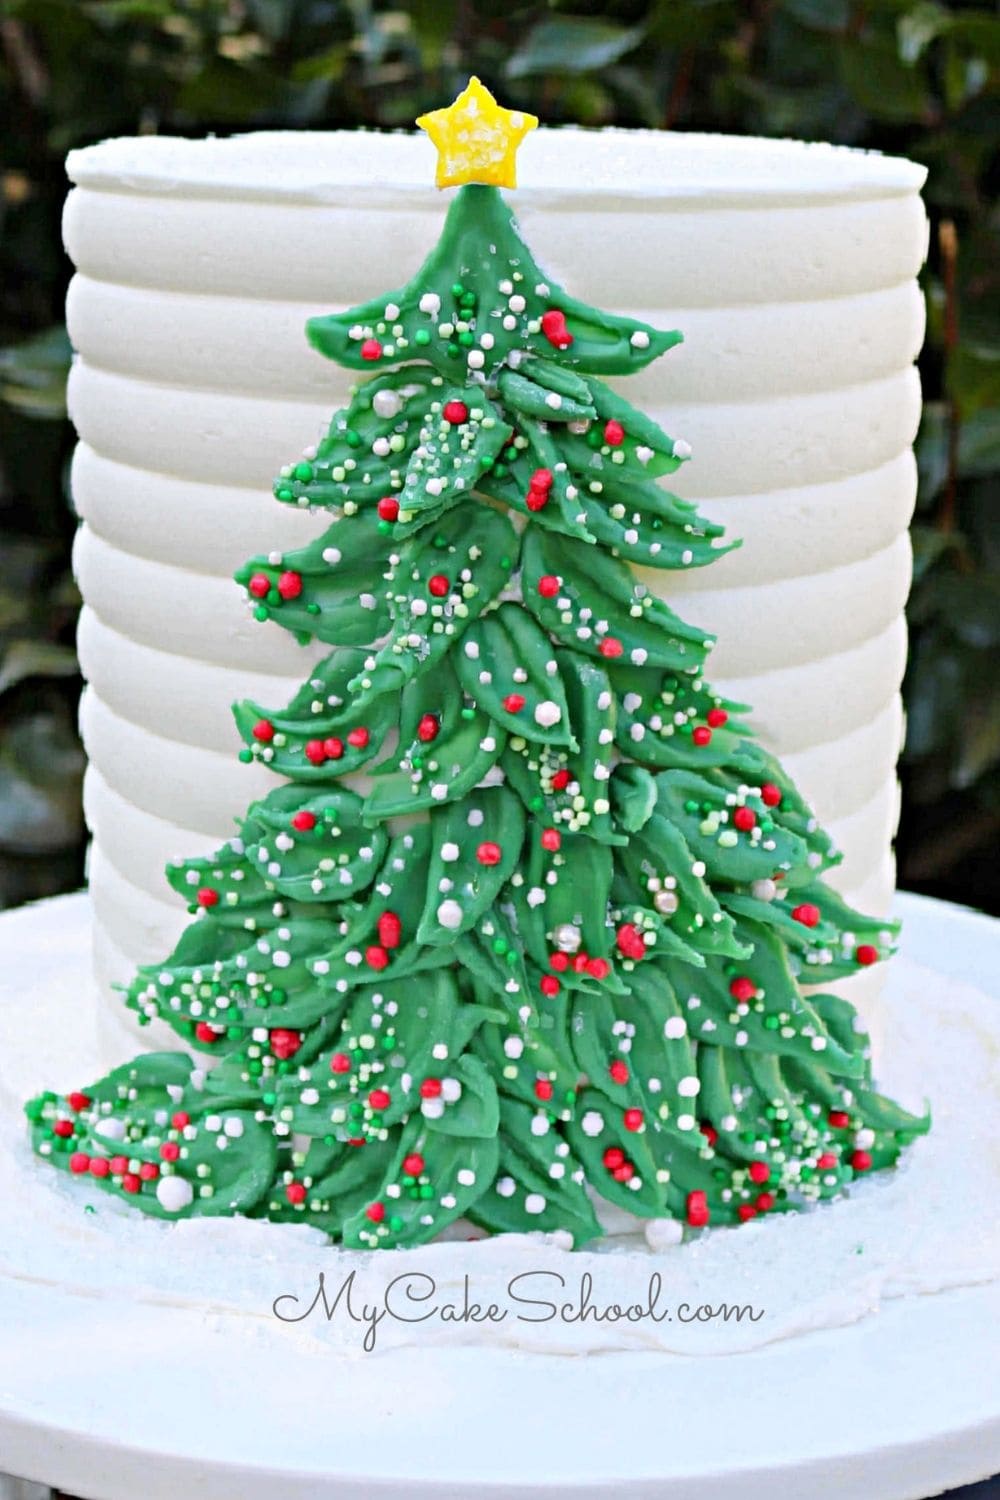 https://www.mycakeschool.com/images/2021/12/Christmas-Tree-Cake-Tutorial-in-Chocolate-image.jpg